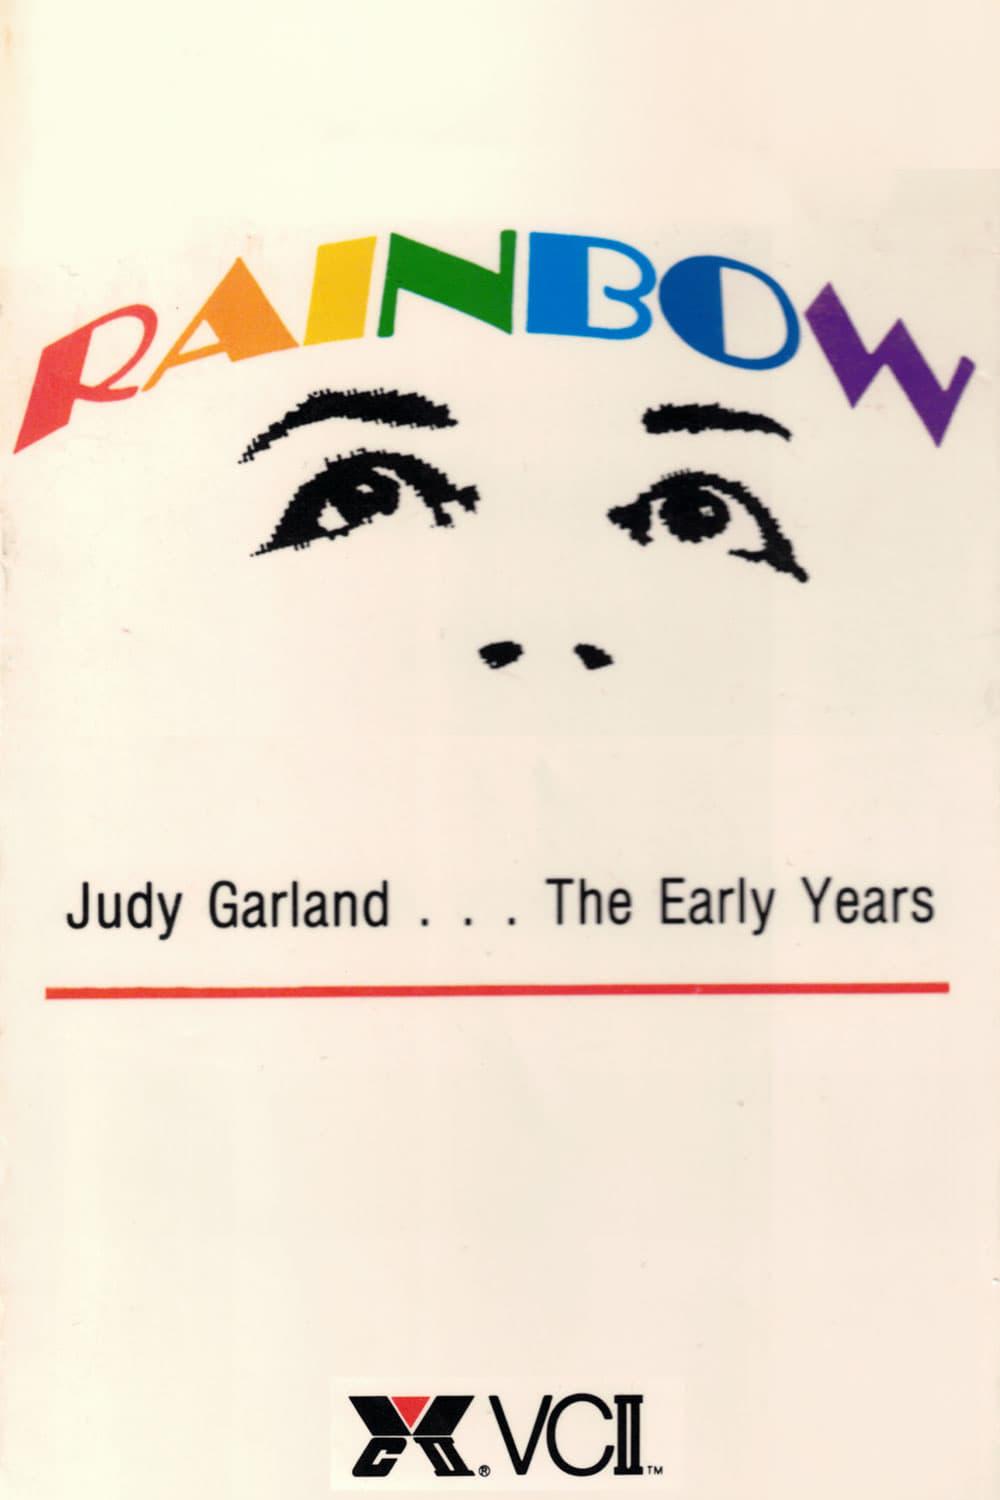 Rainbow poster